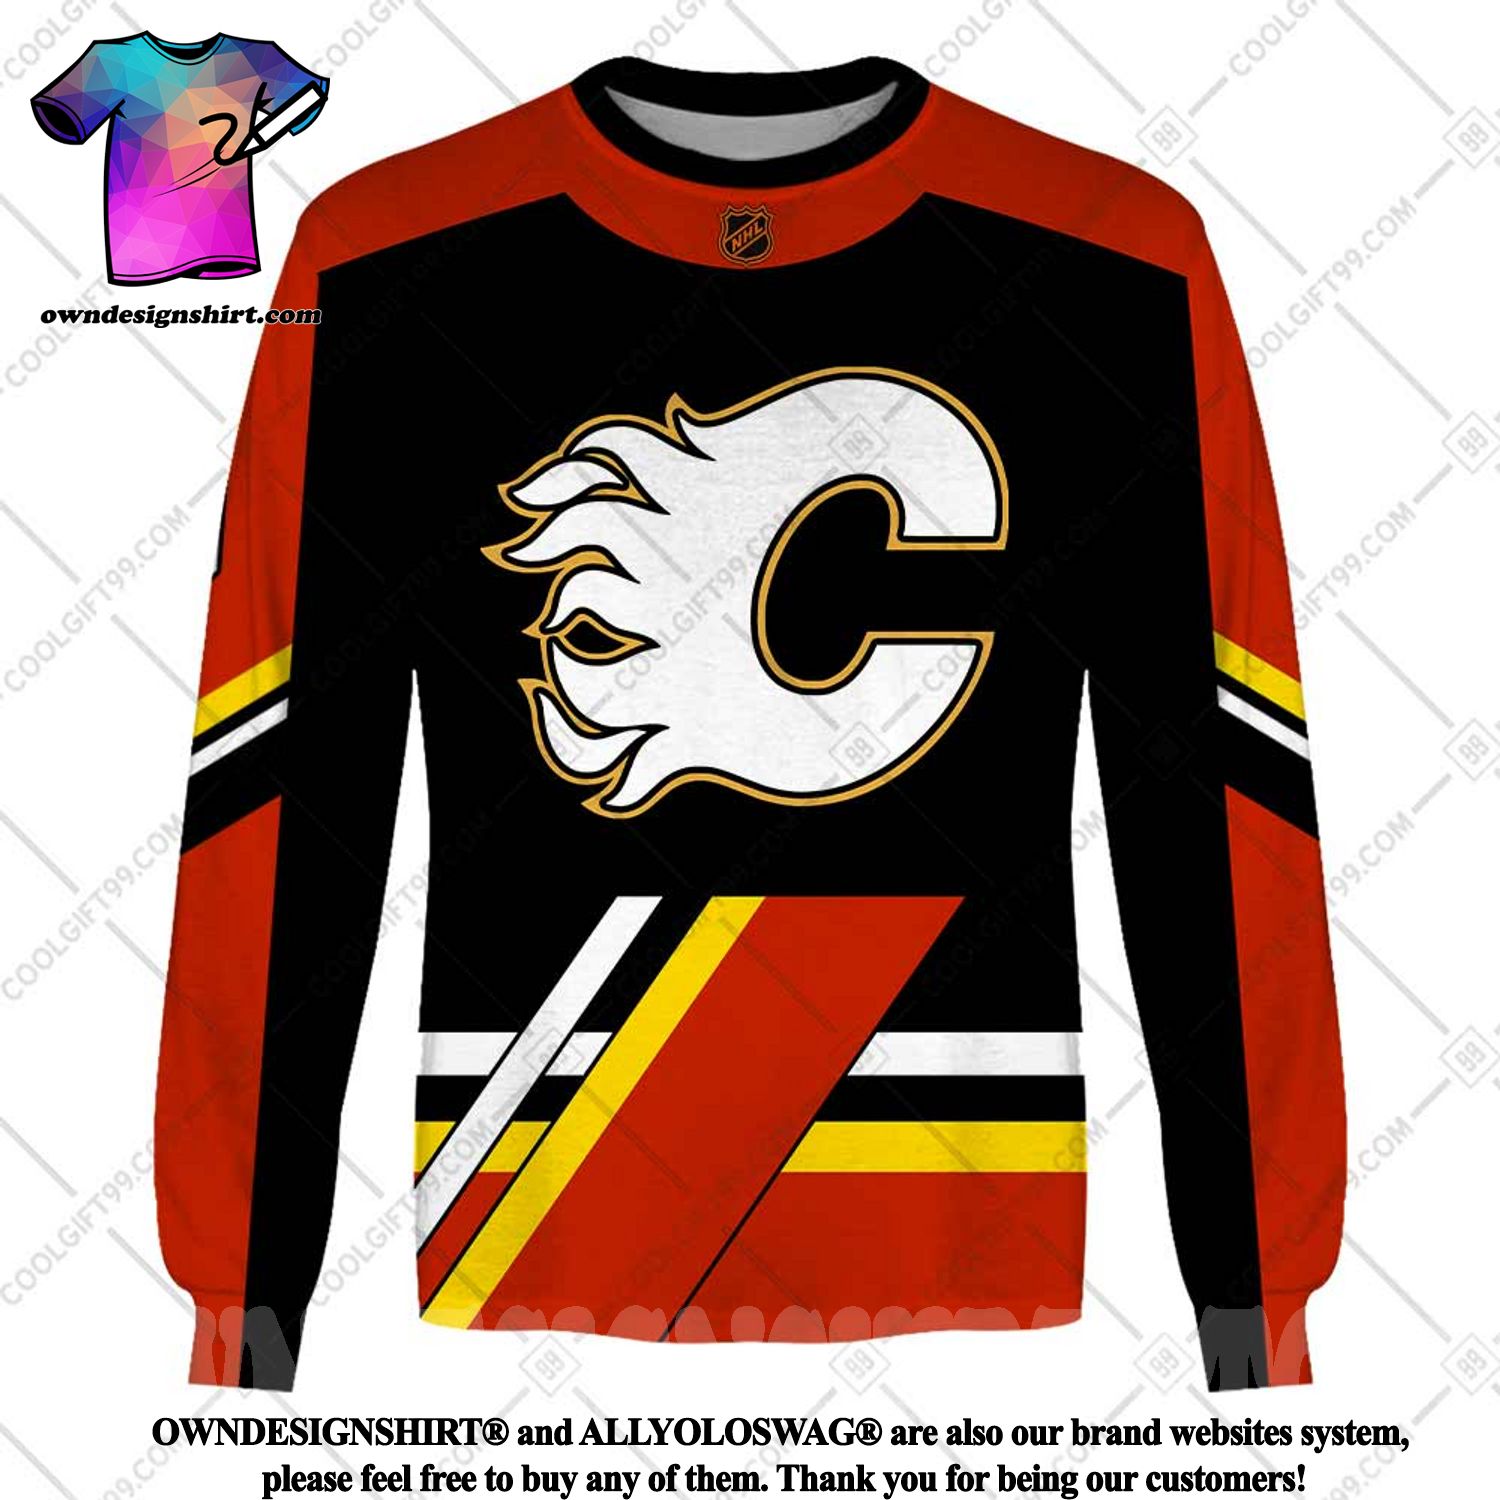 Calgary Flames Reverse Retro Jersey! 